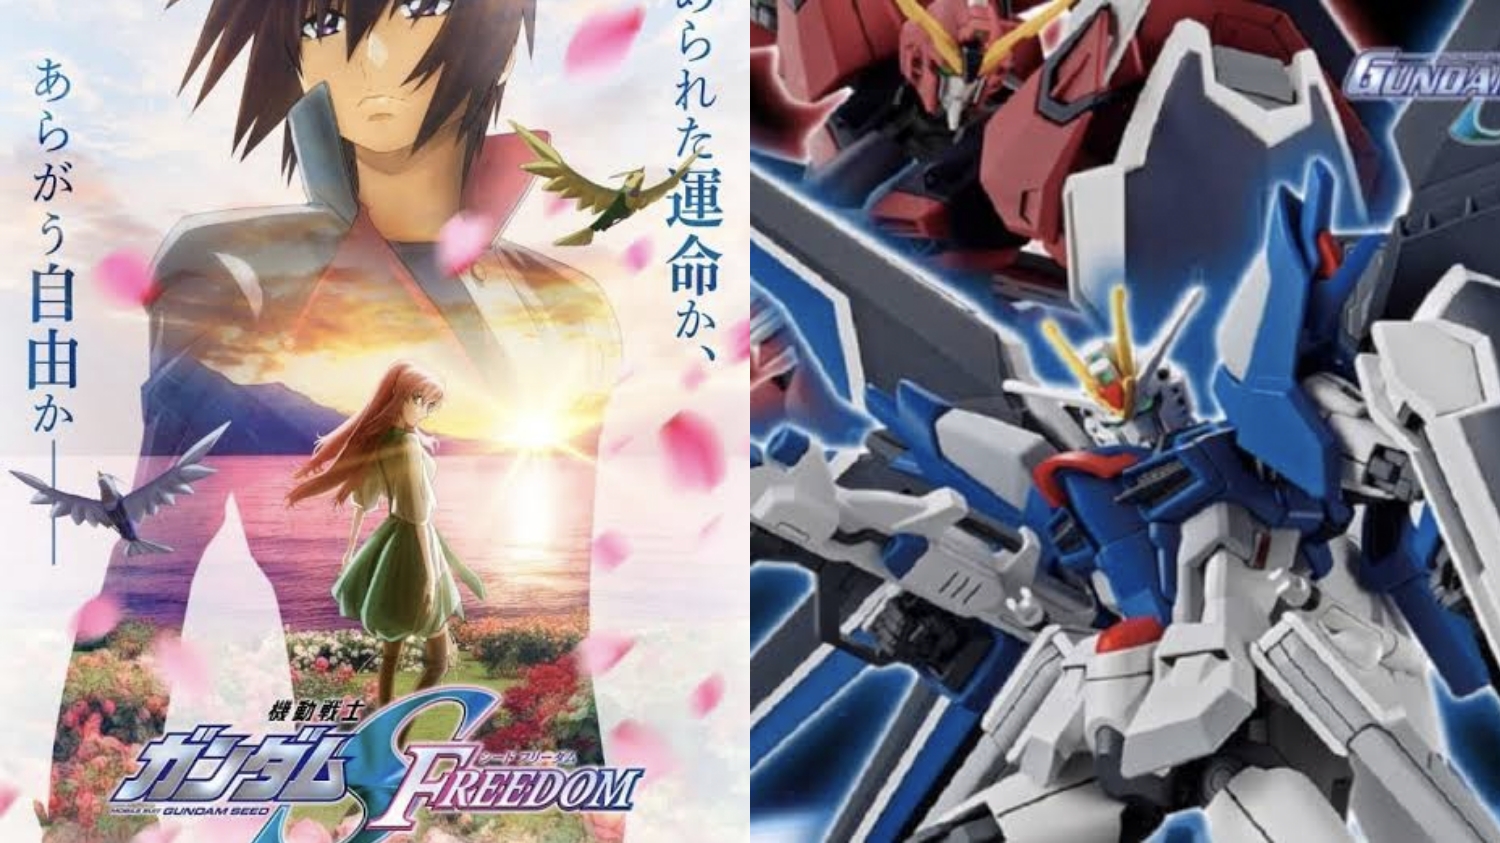 Yuk intip Sinopsis Mobile Suit Gundam Seed Freedom, Sedang Tayang di Bioskop!